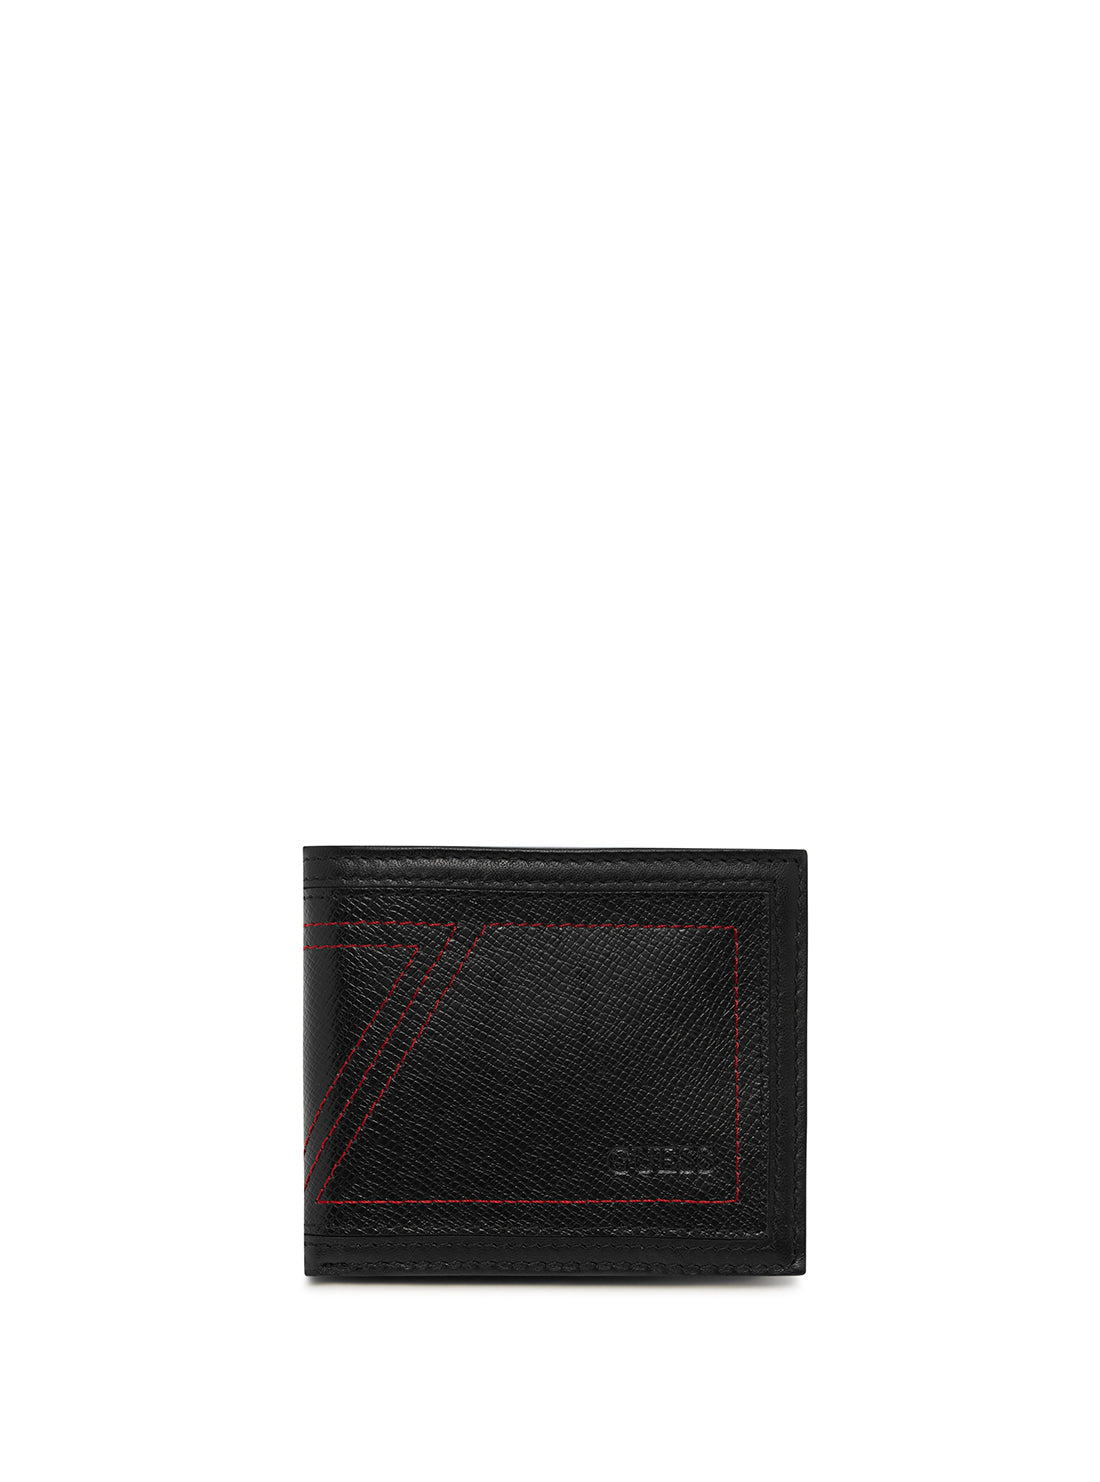 GUESS Men's Black Ramona Passcase Wallet 31GUE22095 Front View